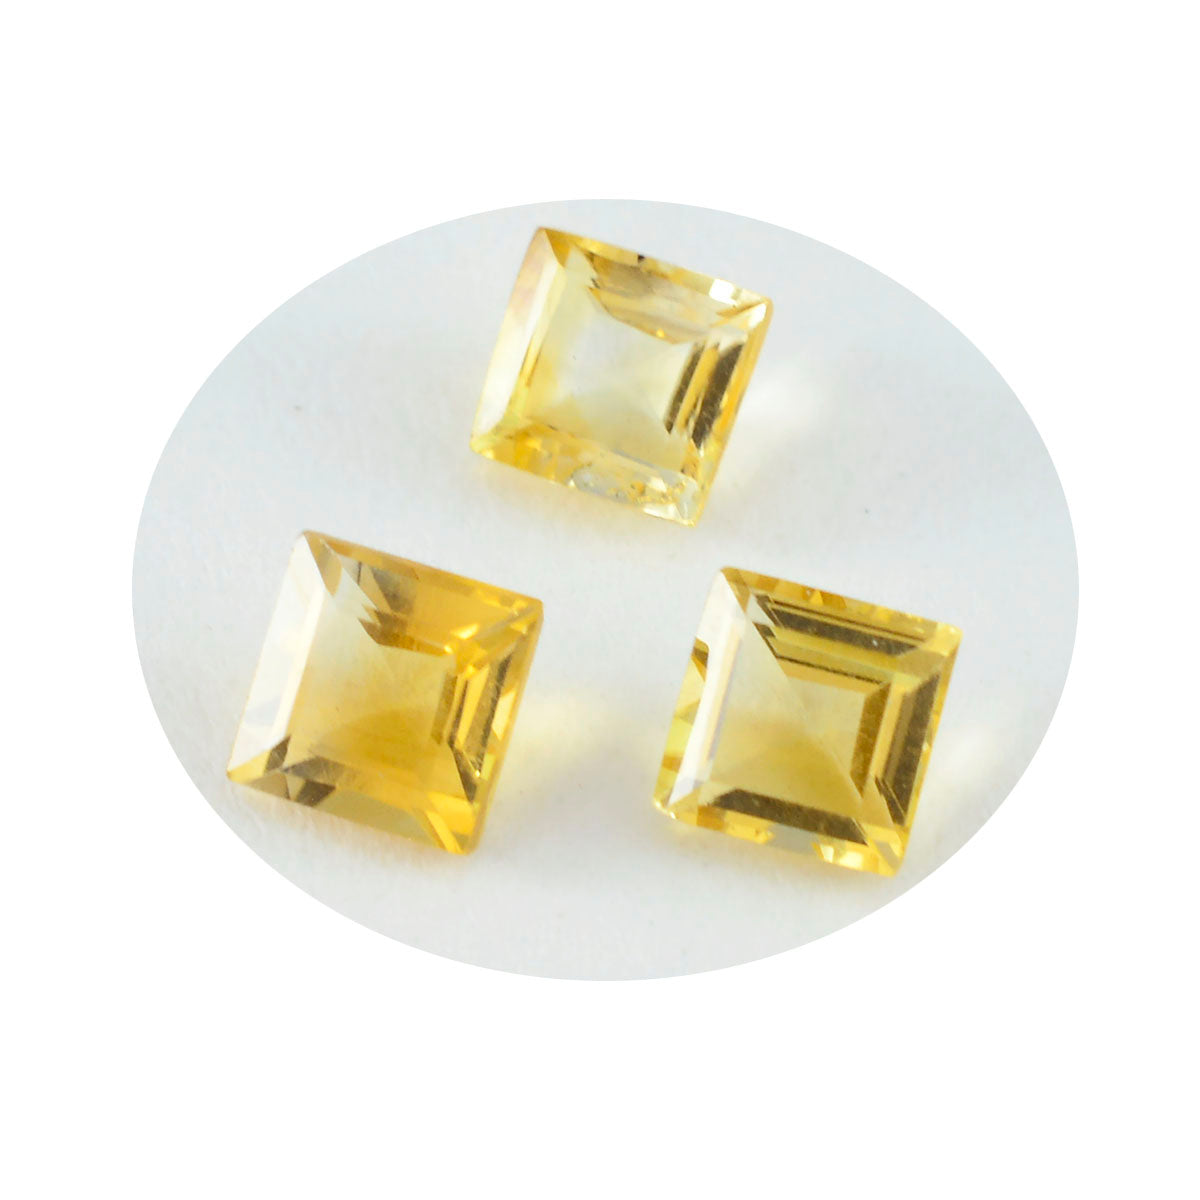 Riyogems 1PC echte gele citrien gefacetteerde 8x8 mm vierkante vorm knappe kwaliteit losse edelstenen